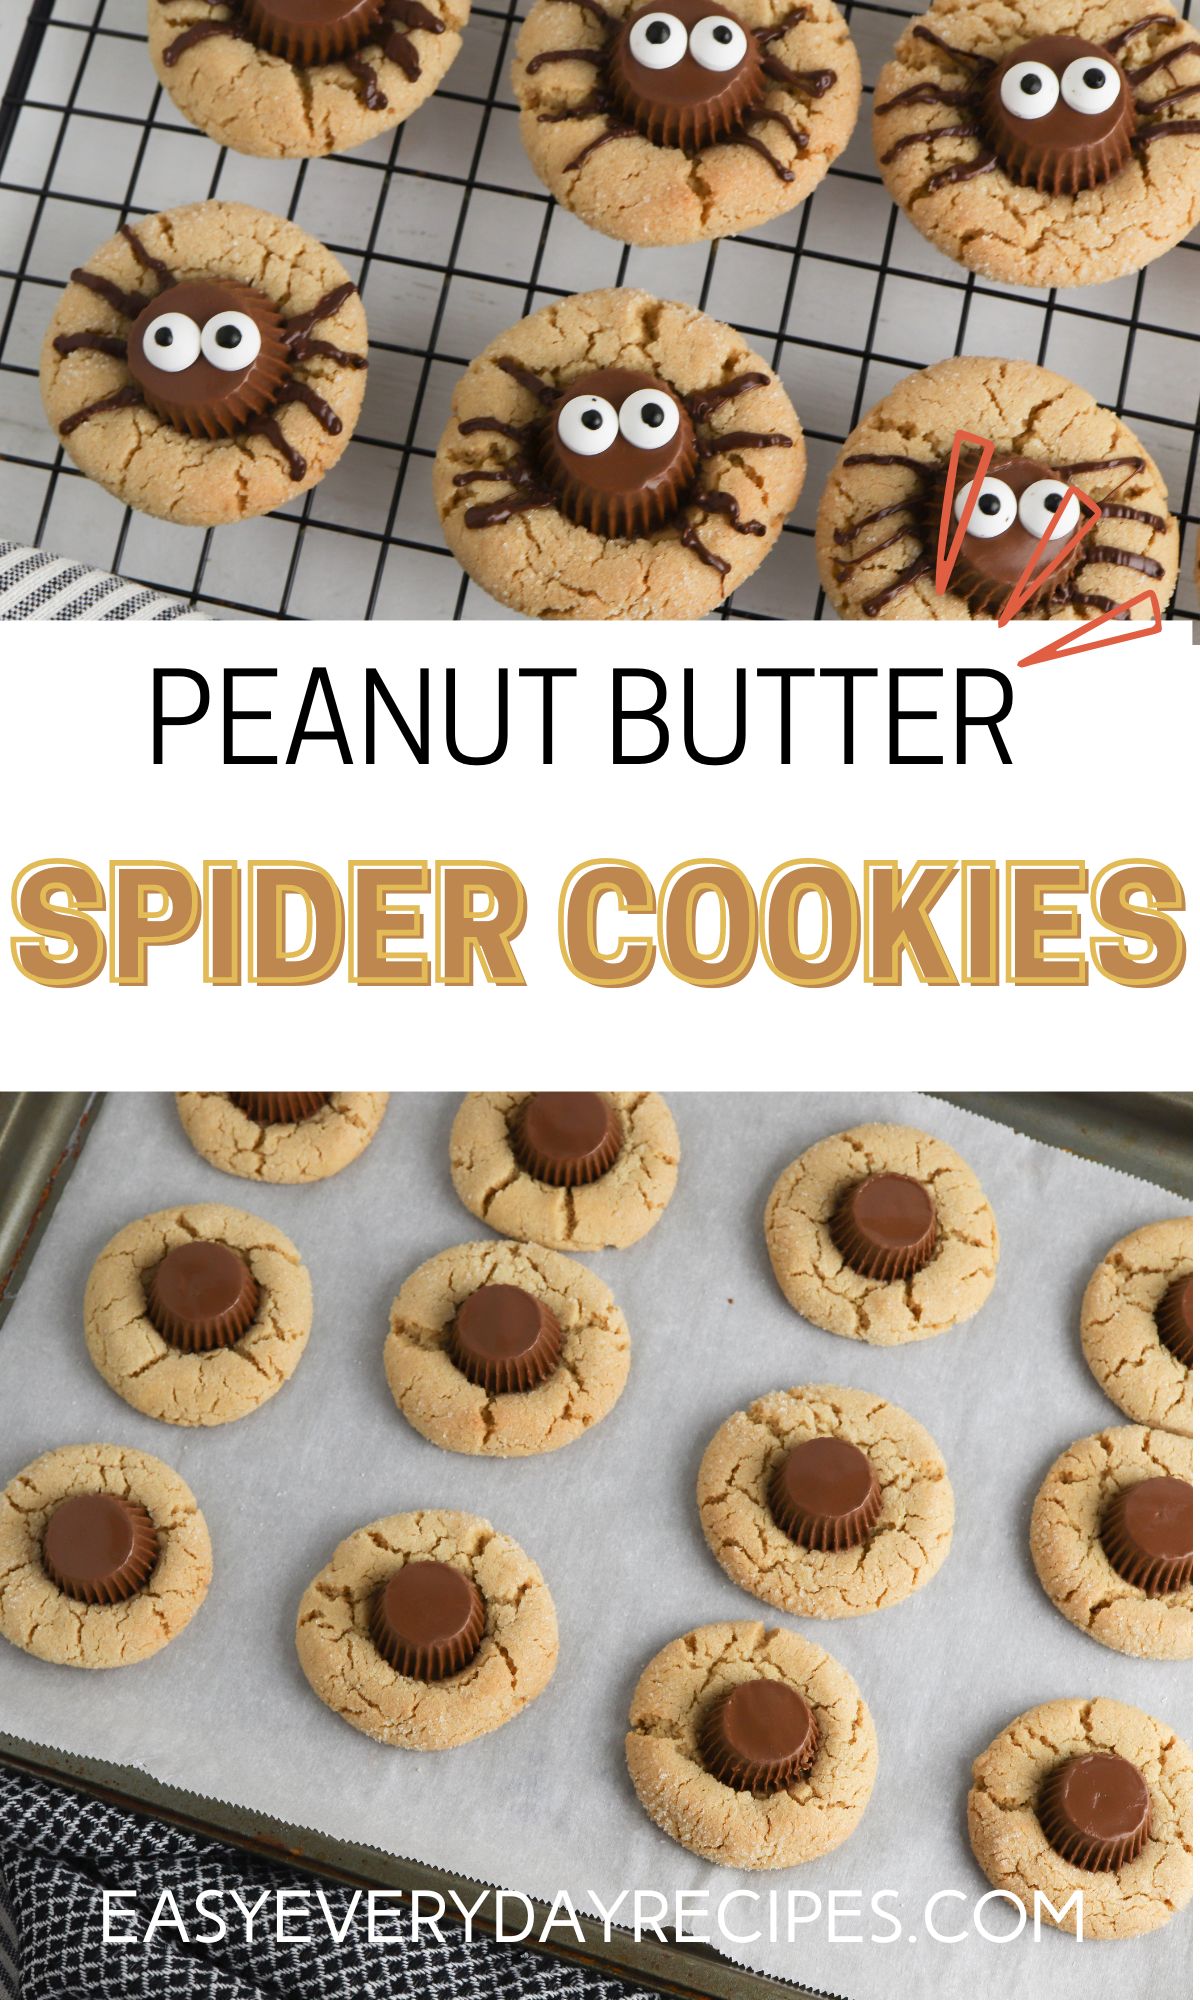 Peanut butter spider cookies.